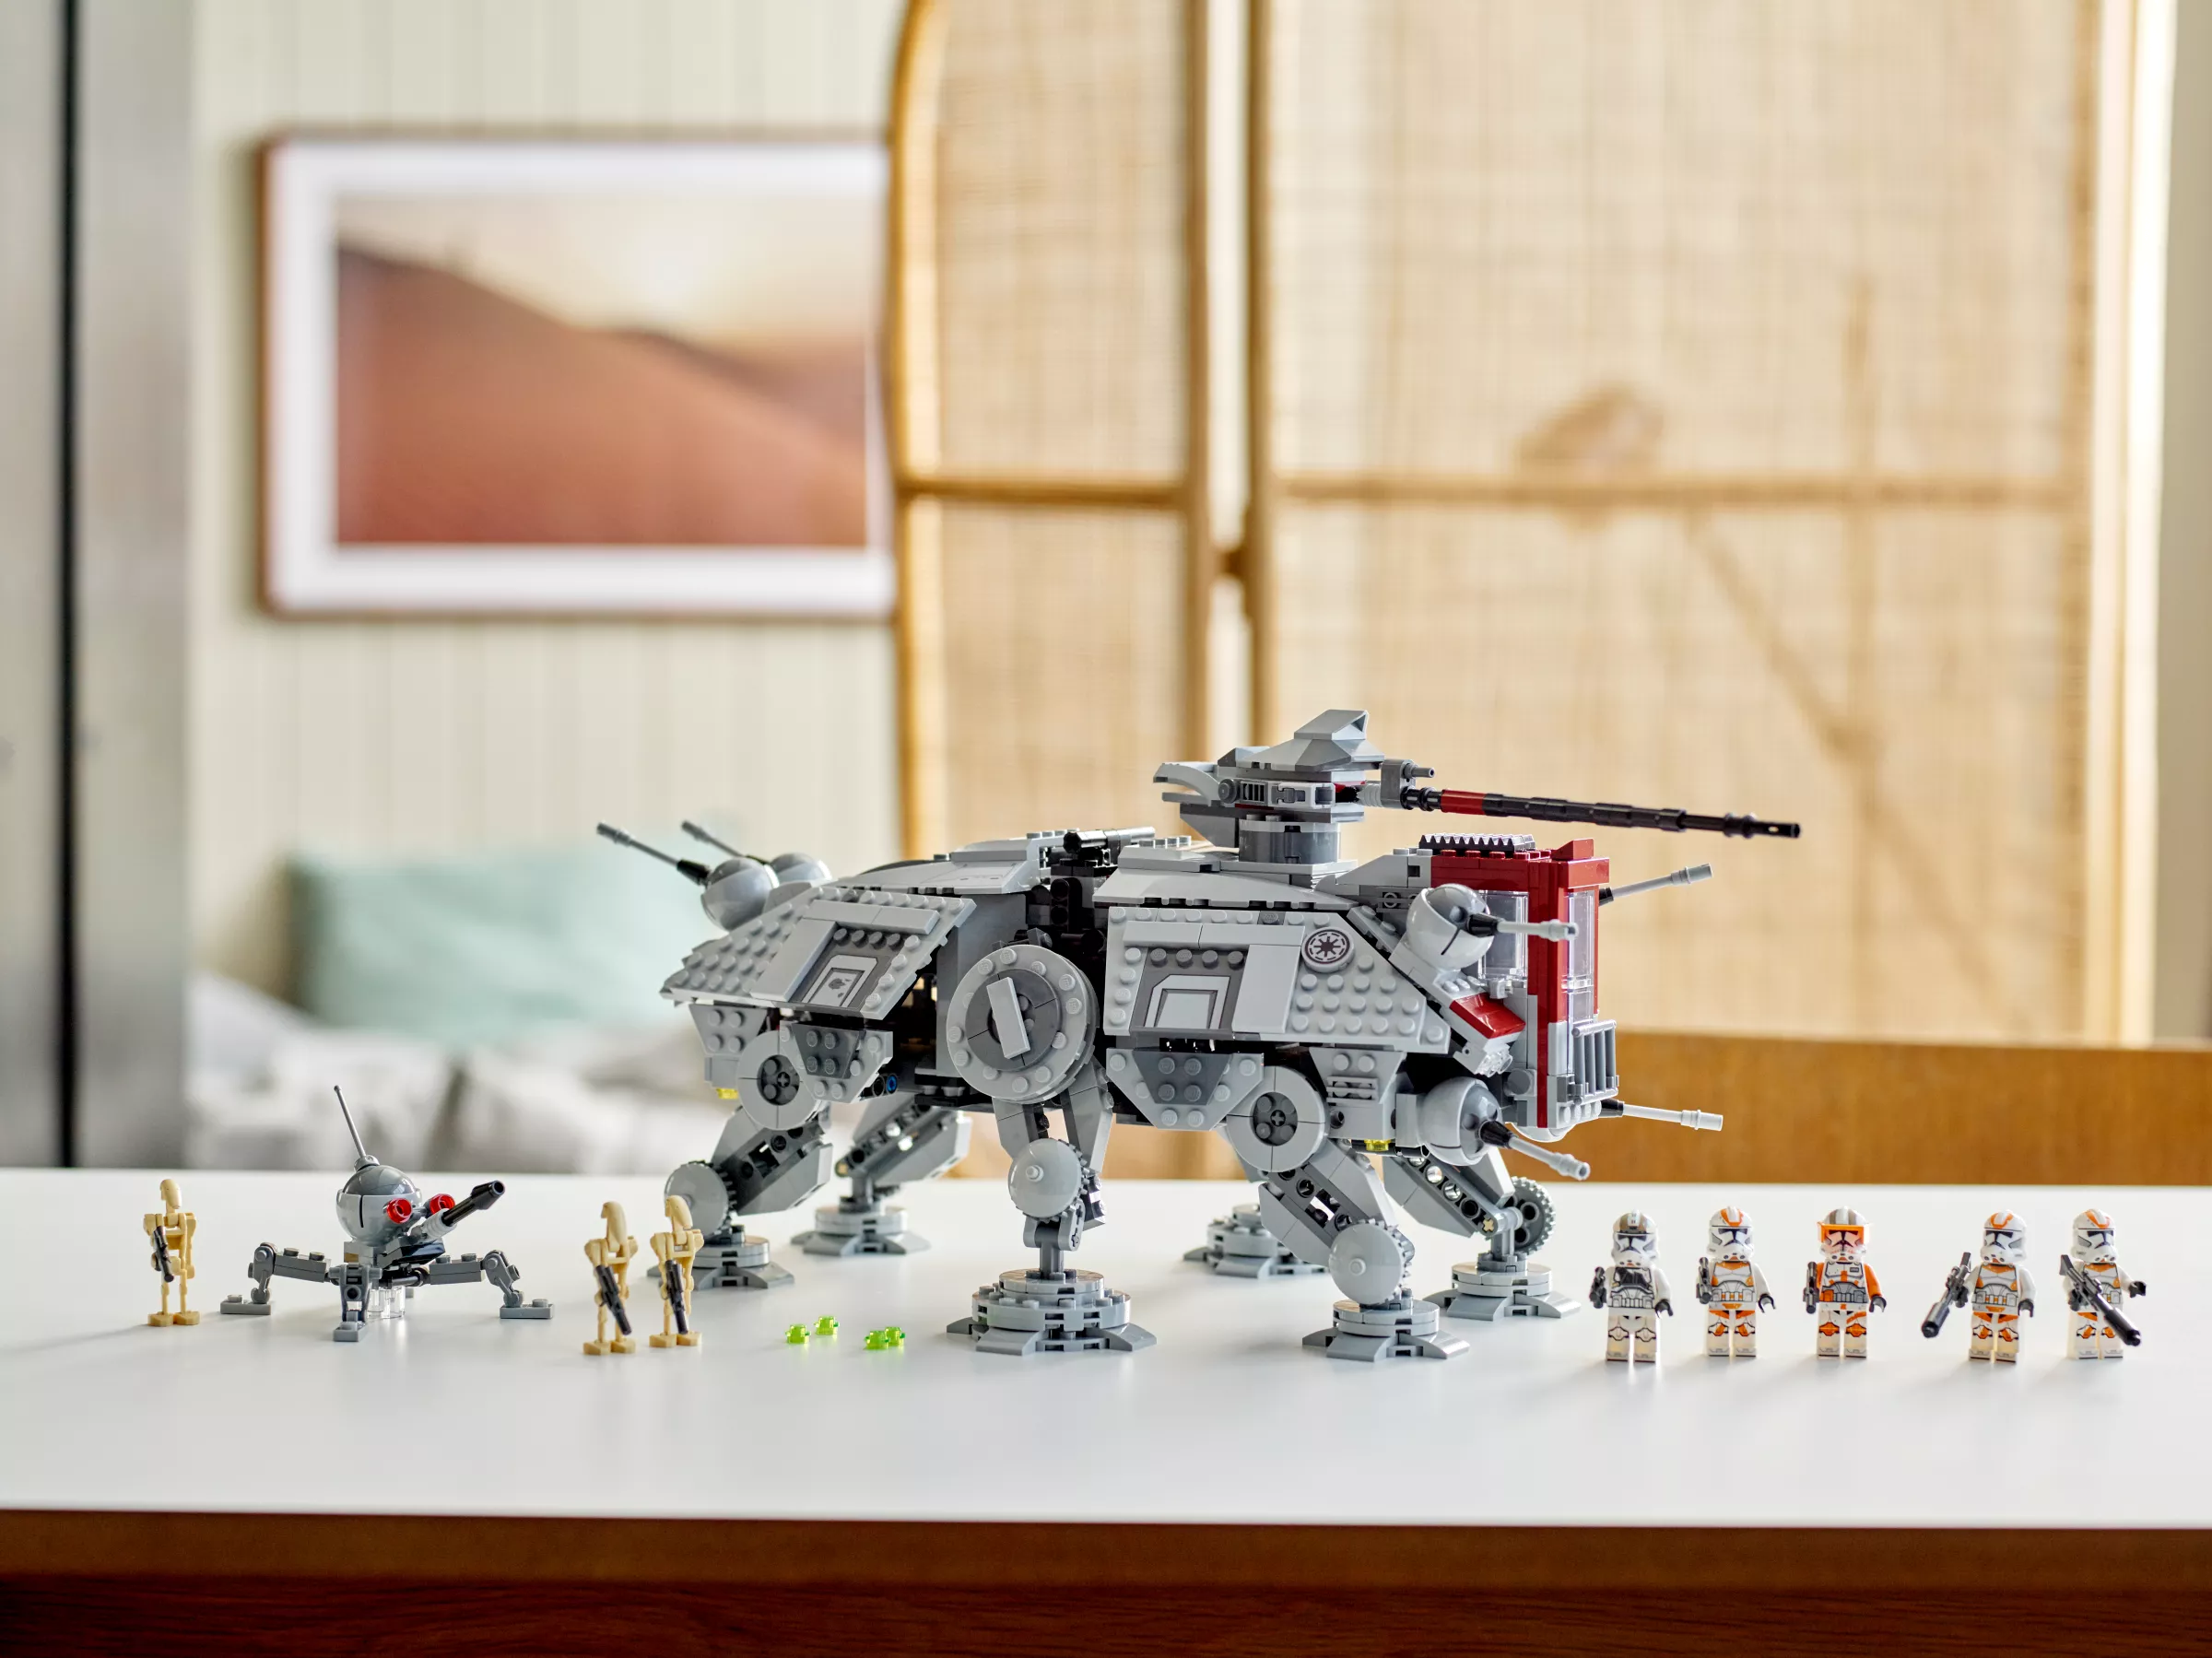 LEGO 75337 Star Wars AT-TE™ Walker